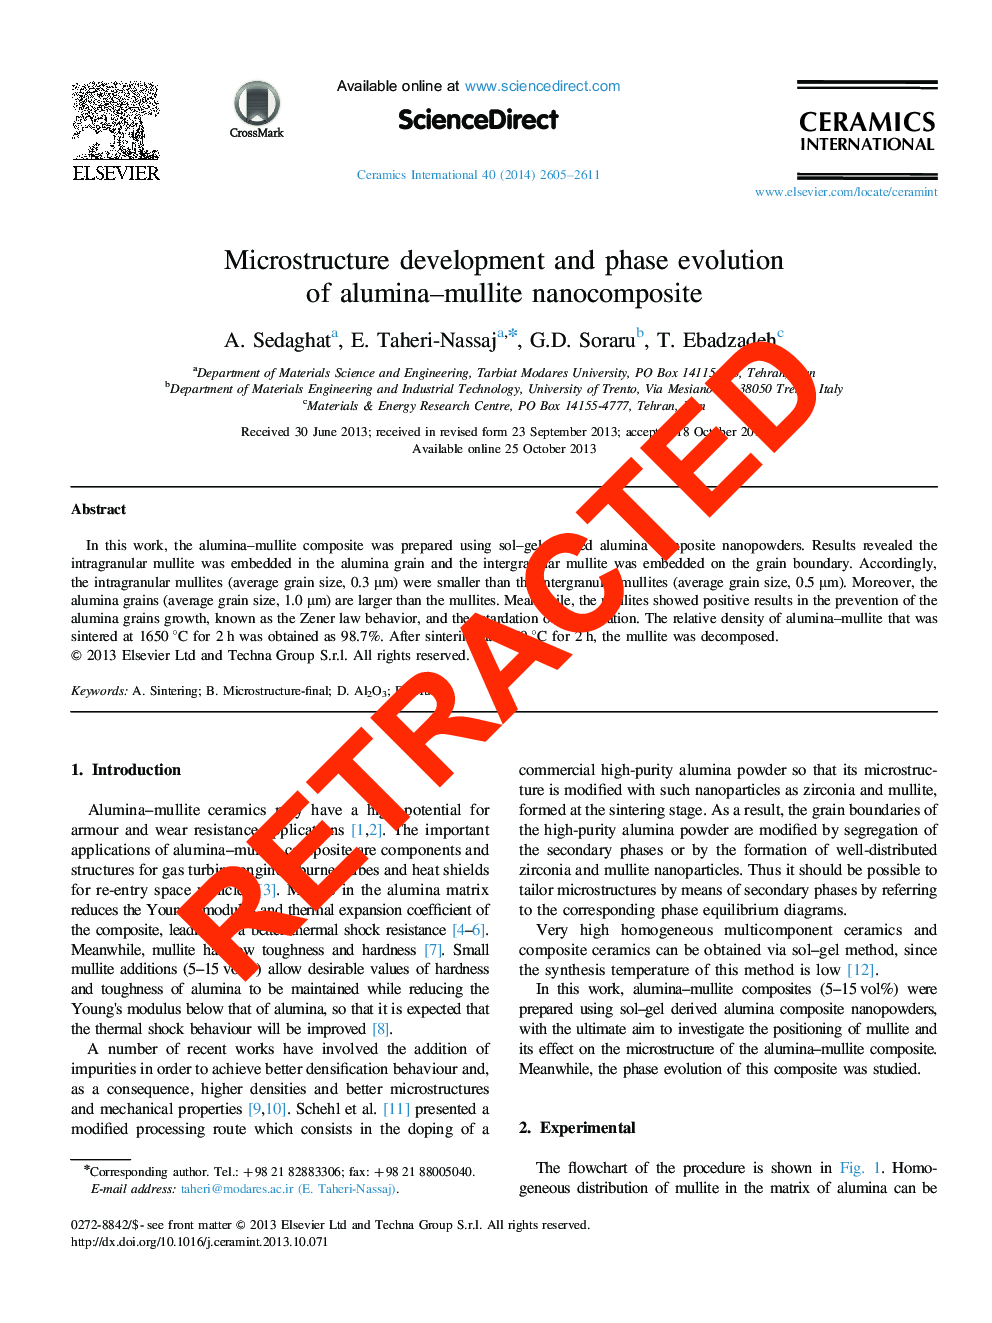 RETRACTED: Microstructure development and phase evolution of alumina–mullite nanocomposite